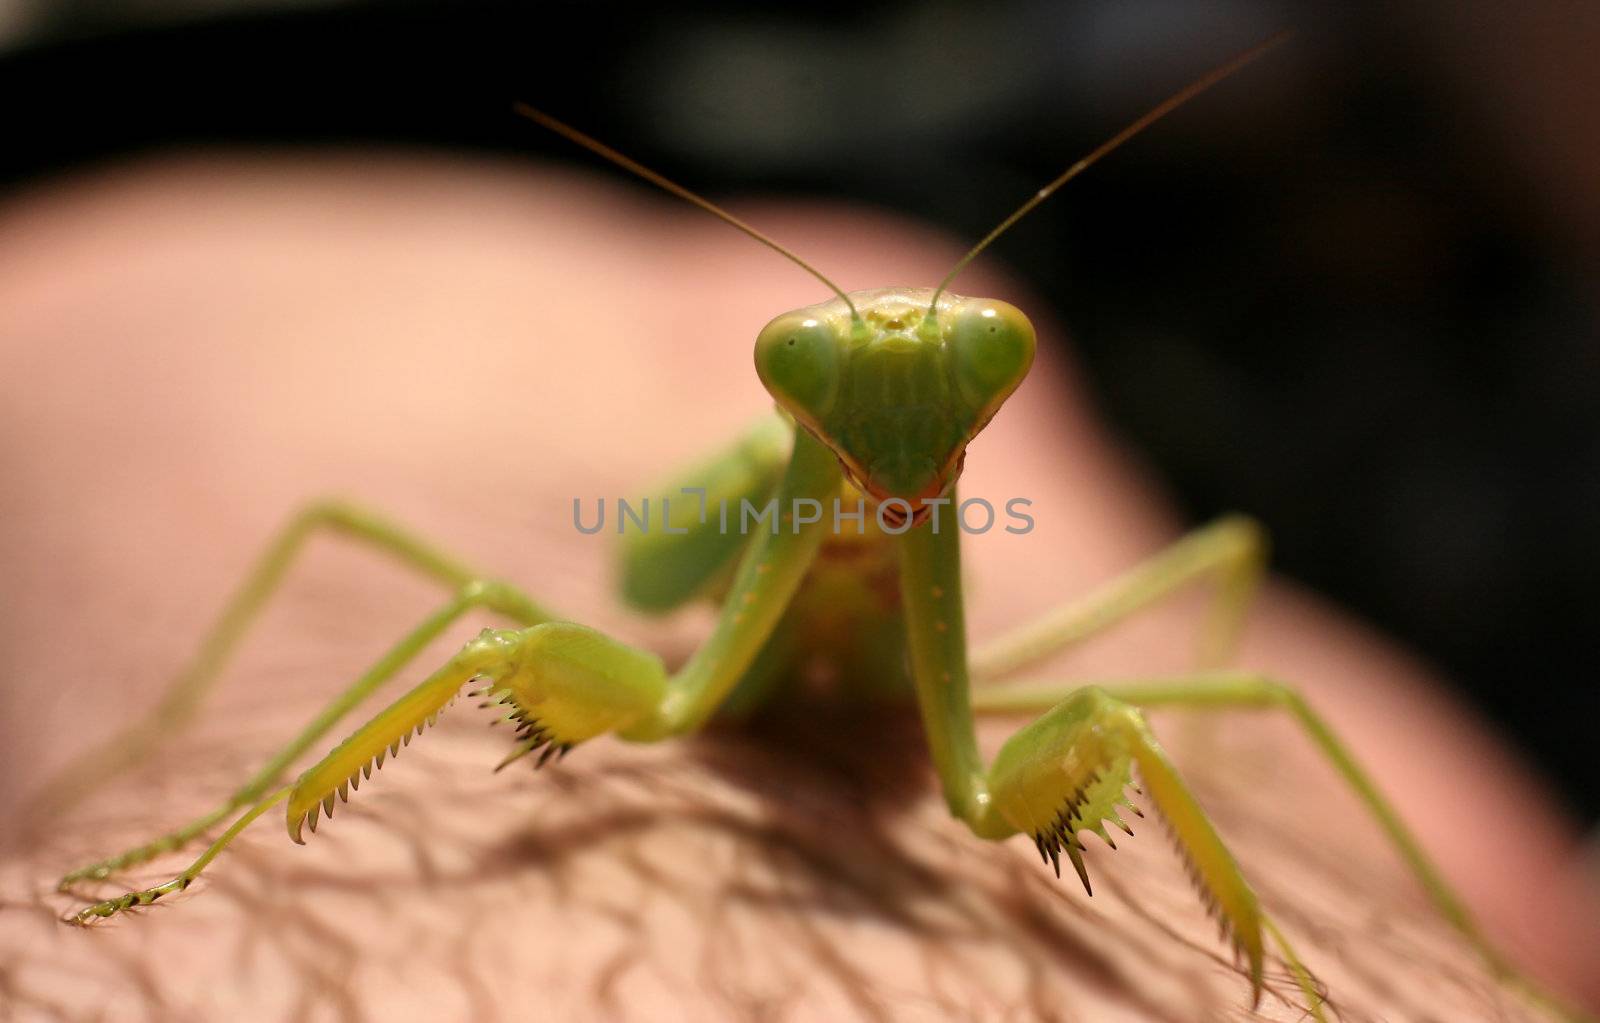 the mantis close-up image for you